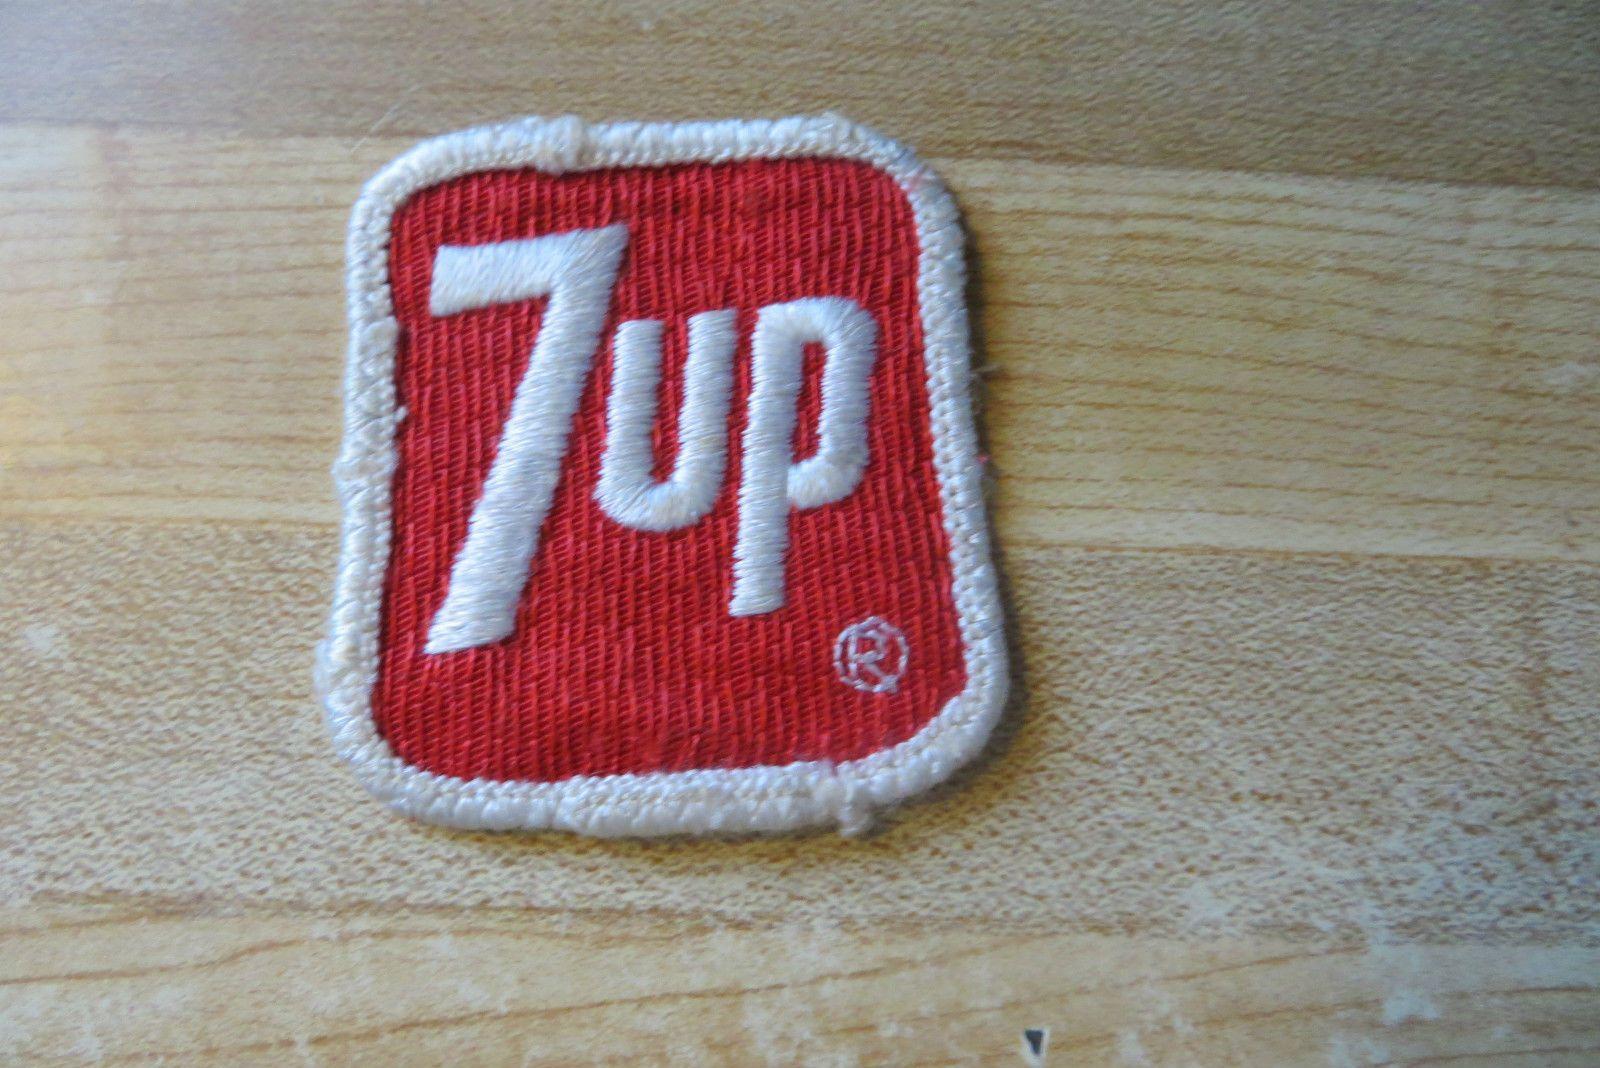 Pop Company Logo - Original soda pop 7up advertising company logo old vintage display patch